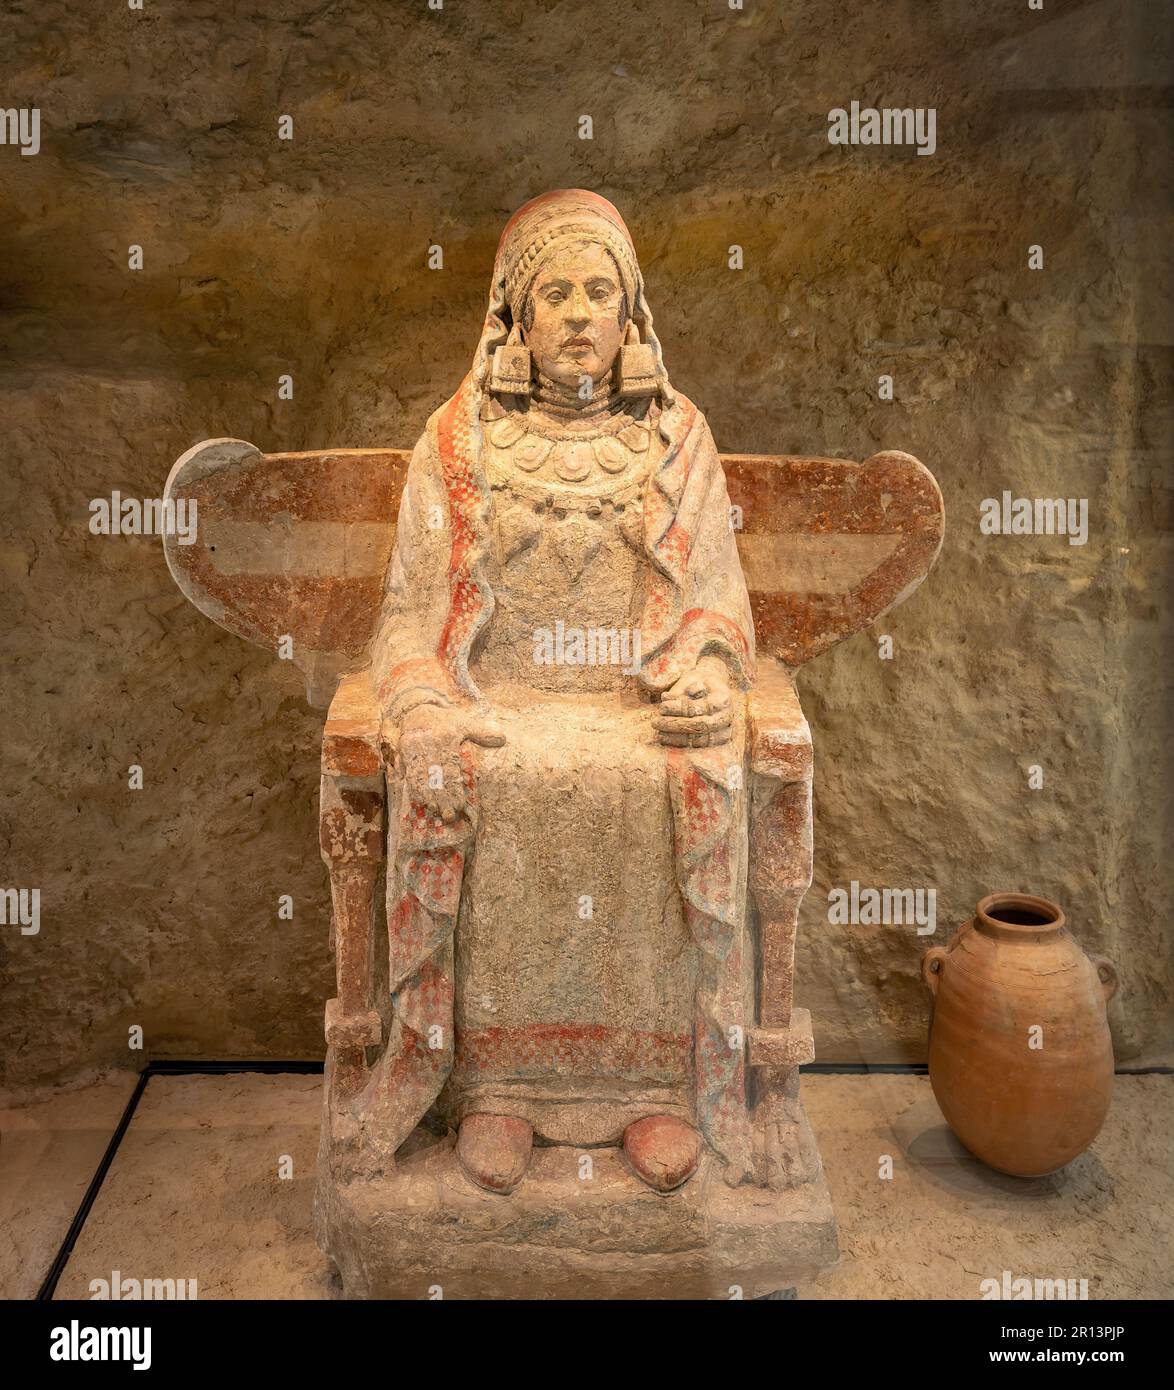 Lady of Baza (La Dama de Baza) Iberian Sculpture by Bastetani people at National Archaeological Museum - Madrid, Spain Stock Photo